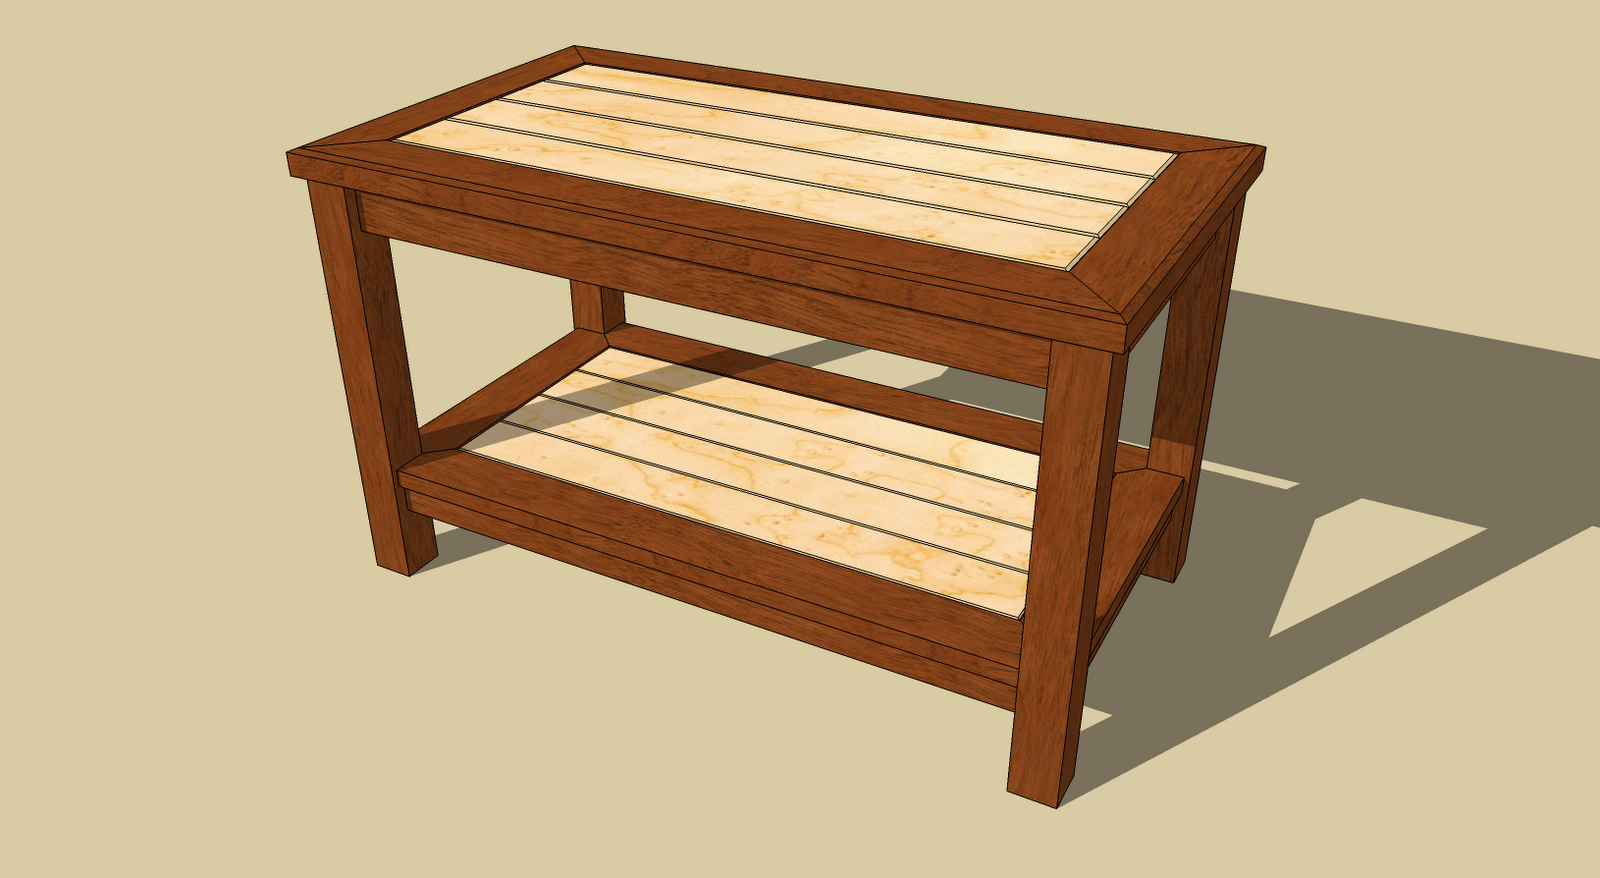 wood table designs plans photo - 6